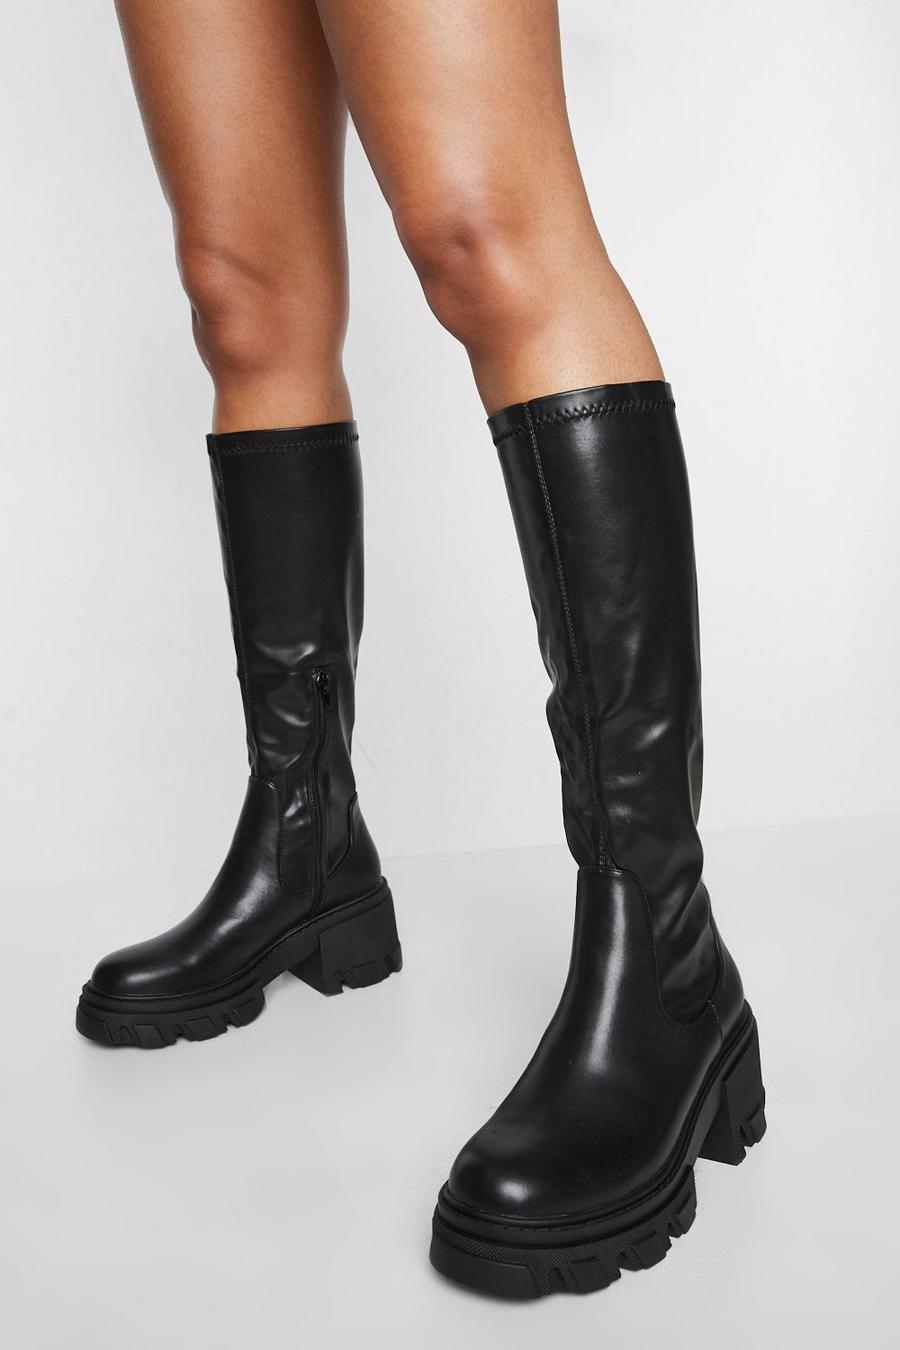 Black noir Calf High Chunky Heeled Boots